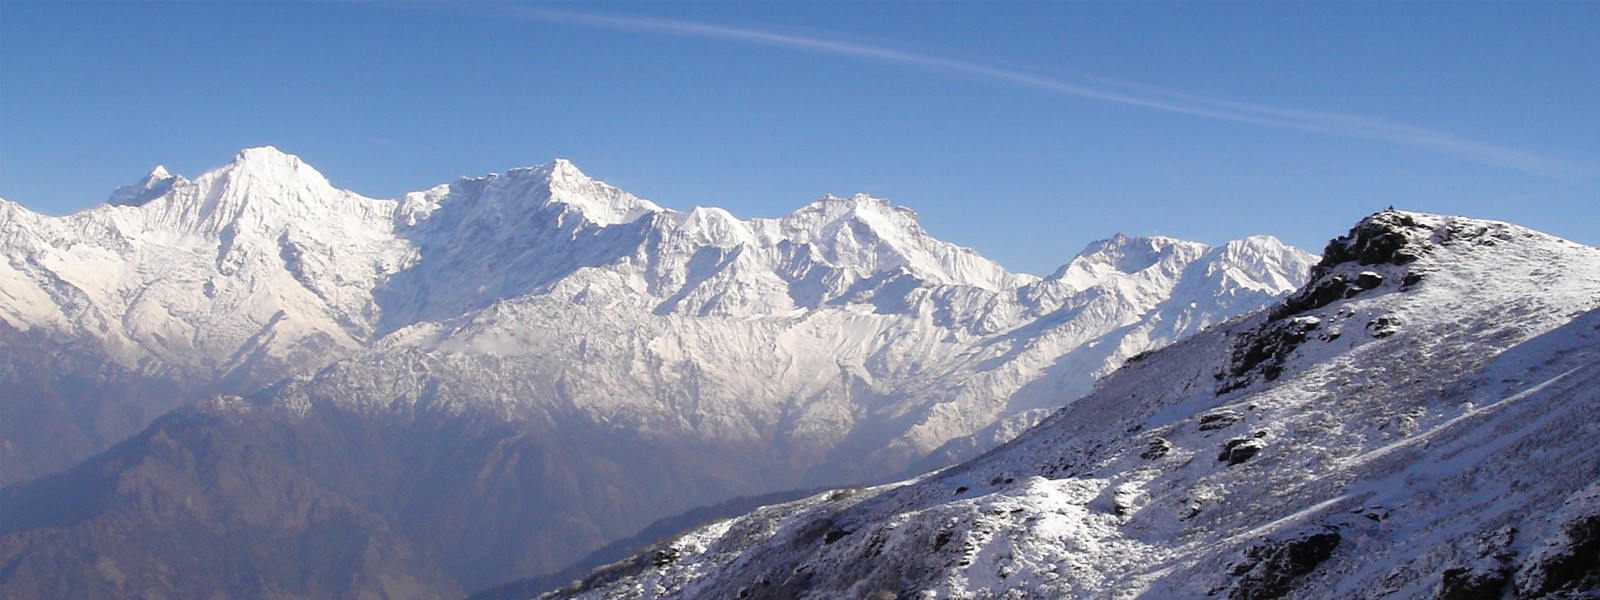 Mount Ganesh Himal II Expedition